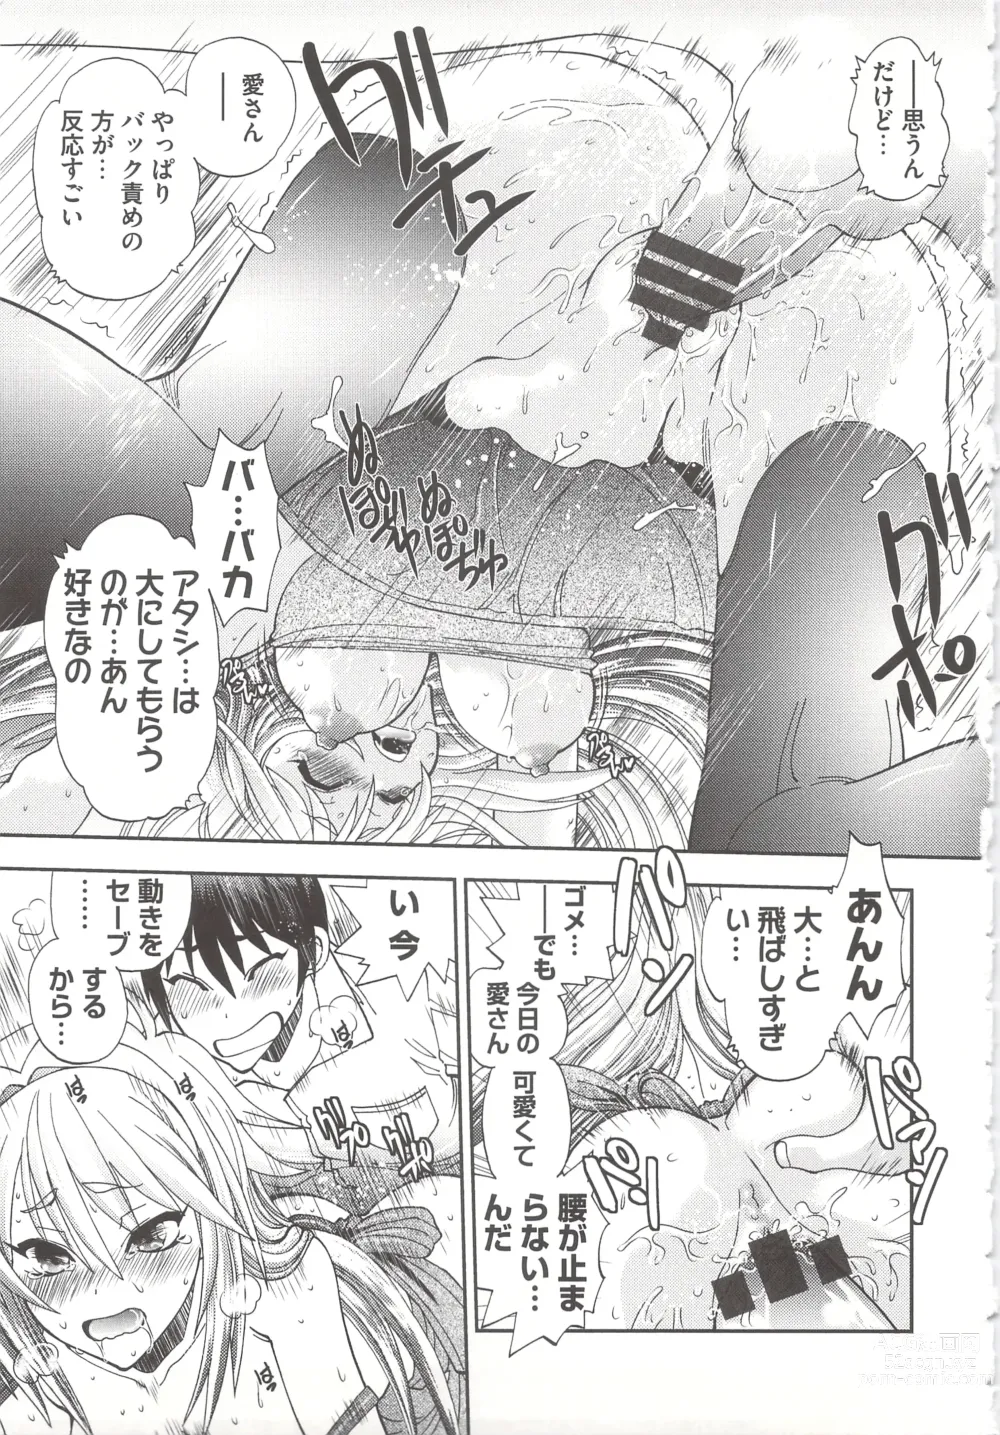 Page 23 of manga Tsujidou-san no Virgin Road Adult Edition